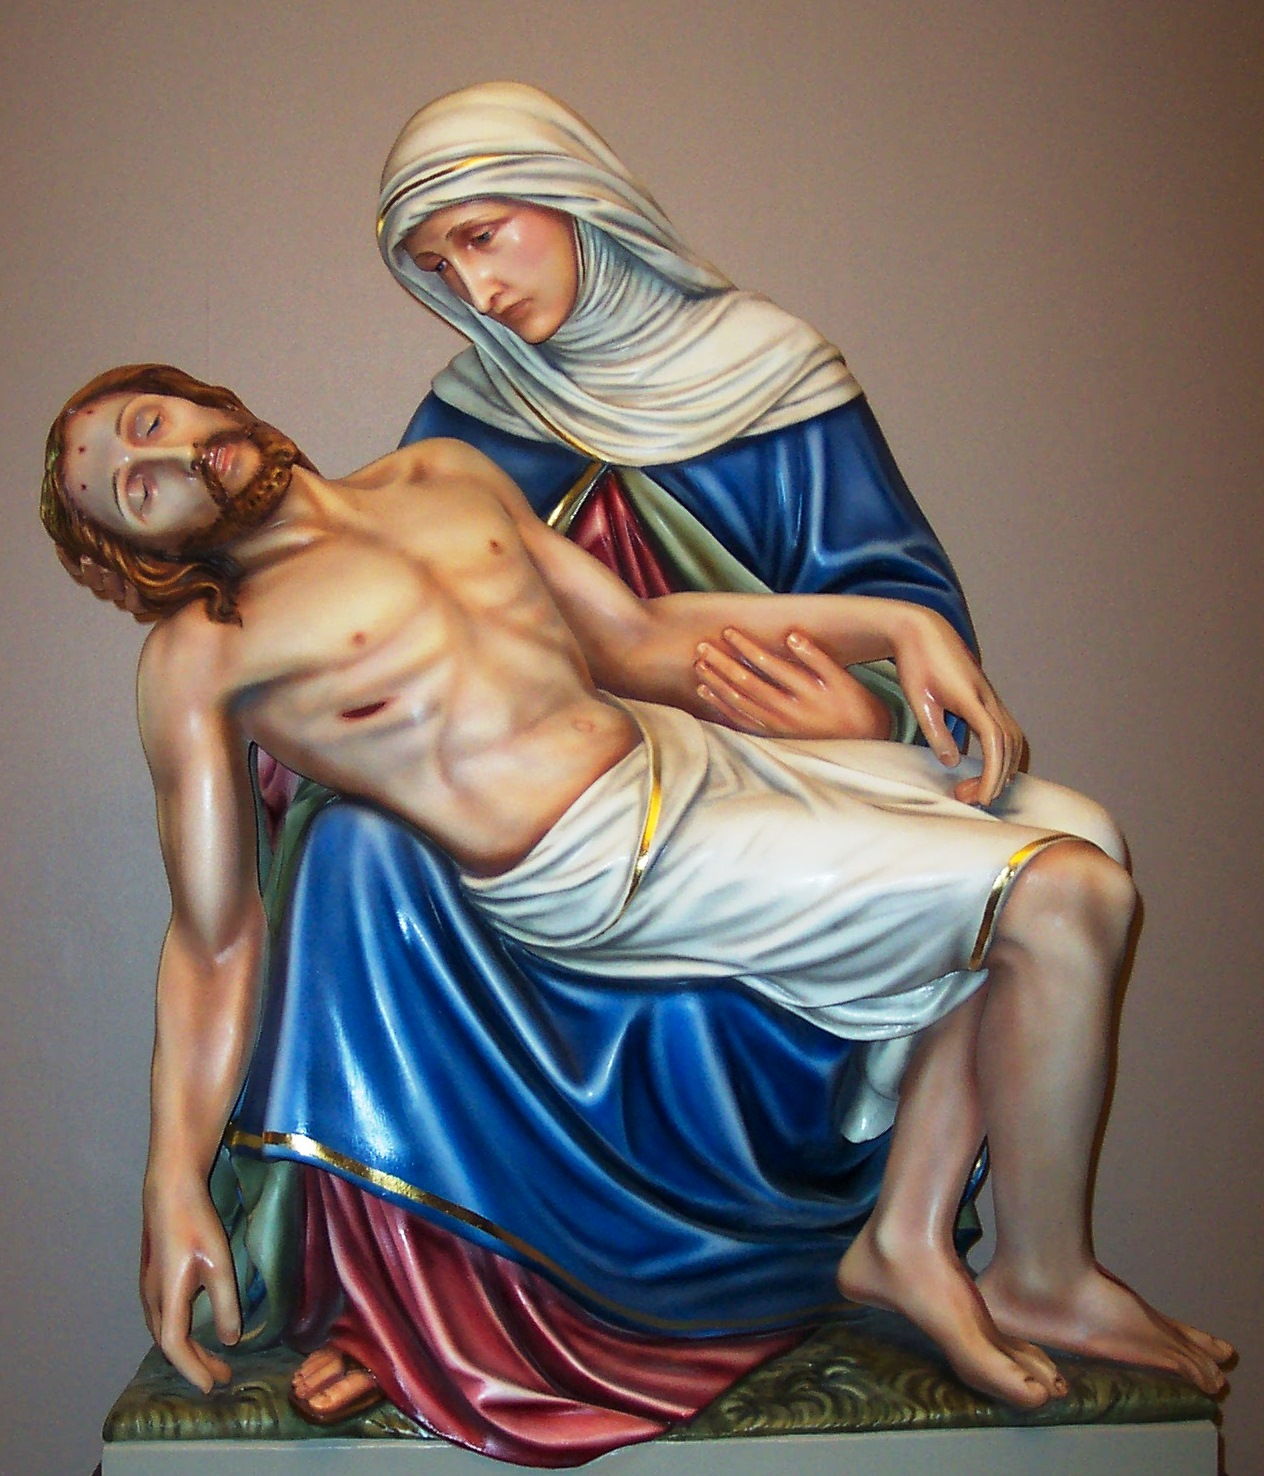 This is the exquisitely restored Pieta Statue at Saint Wenceslaus Church in Saint Louis, Missouri.